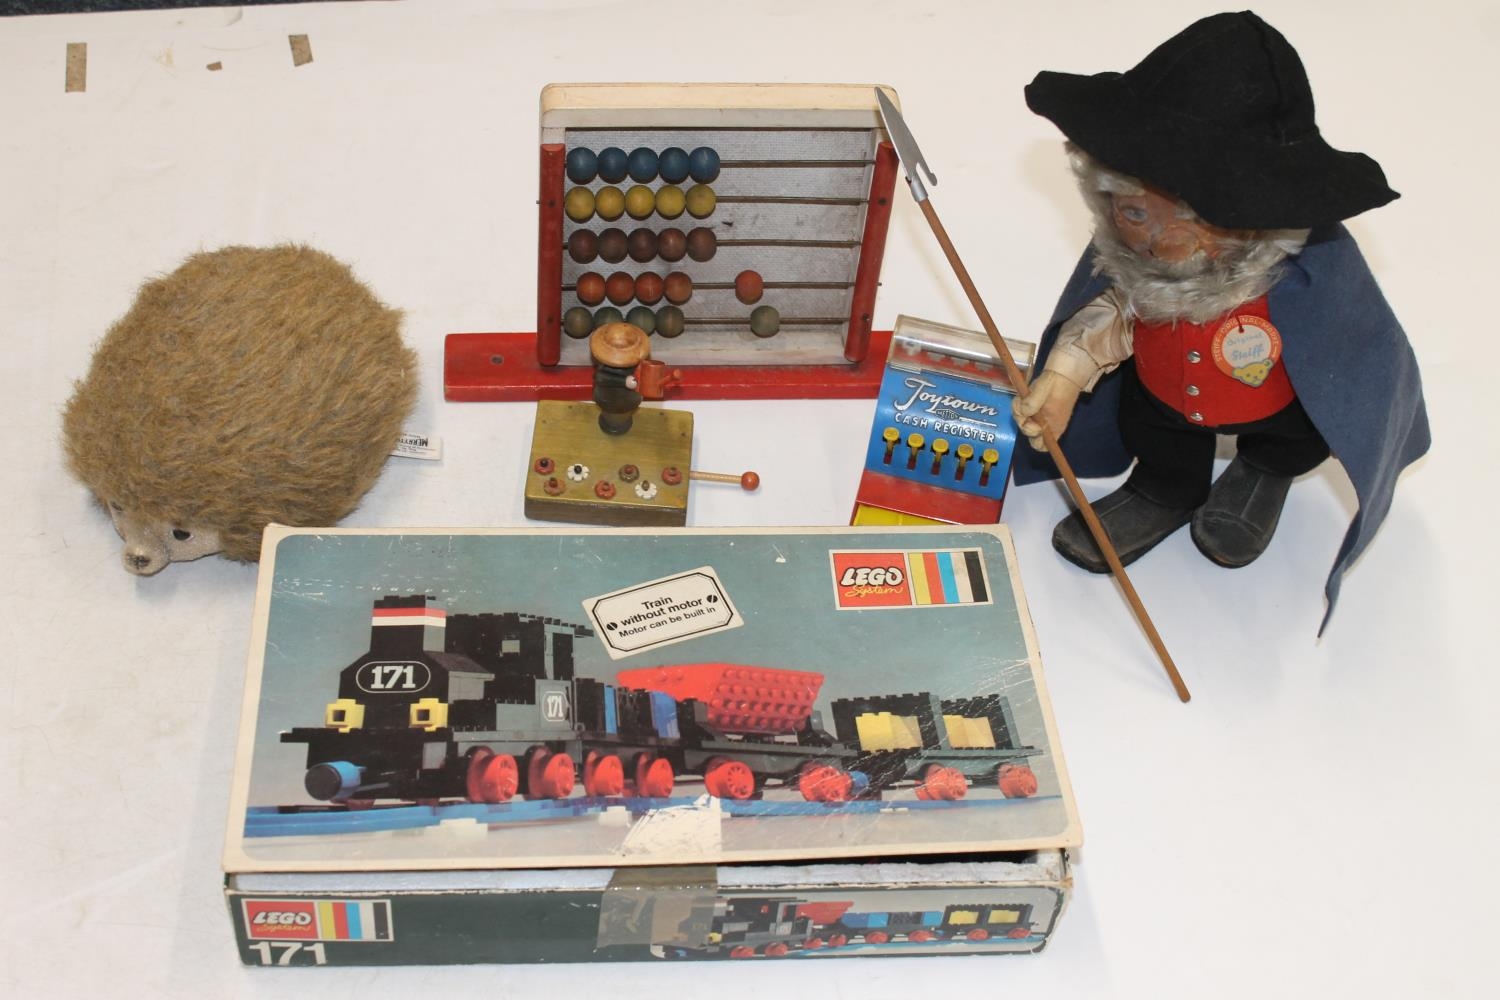 Vintage Steiff Shafer (Shephard) doll with original label, a Merrythought hedgehog soft toy, Lego